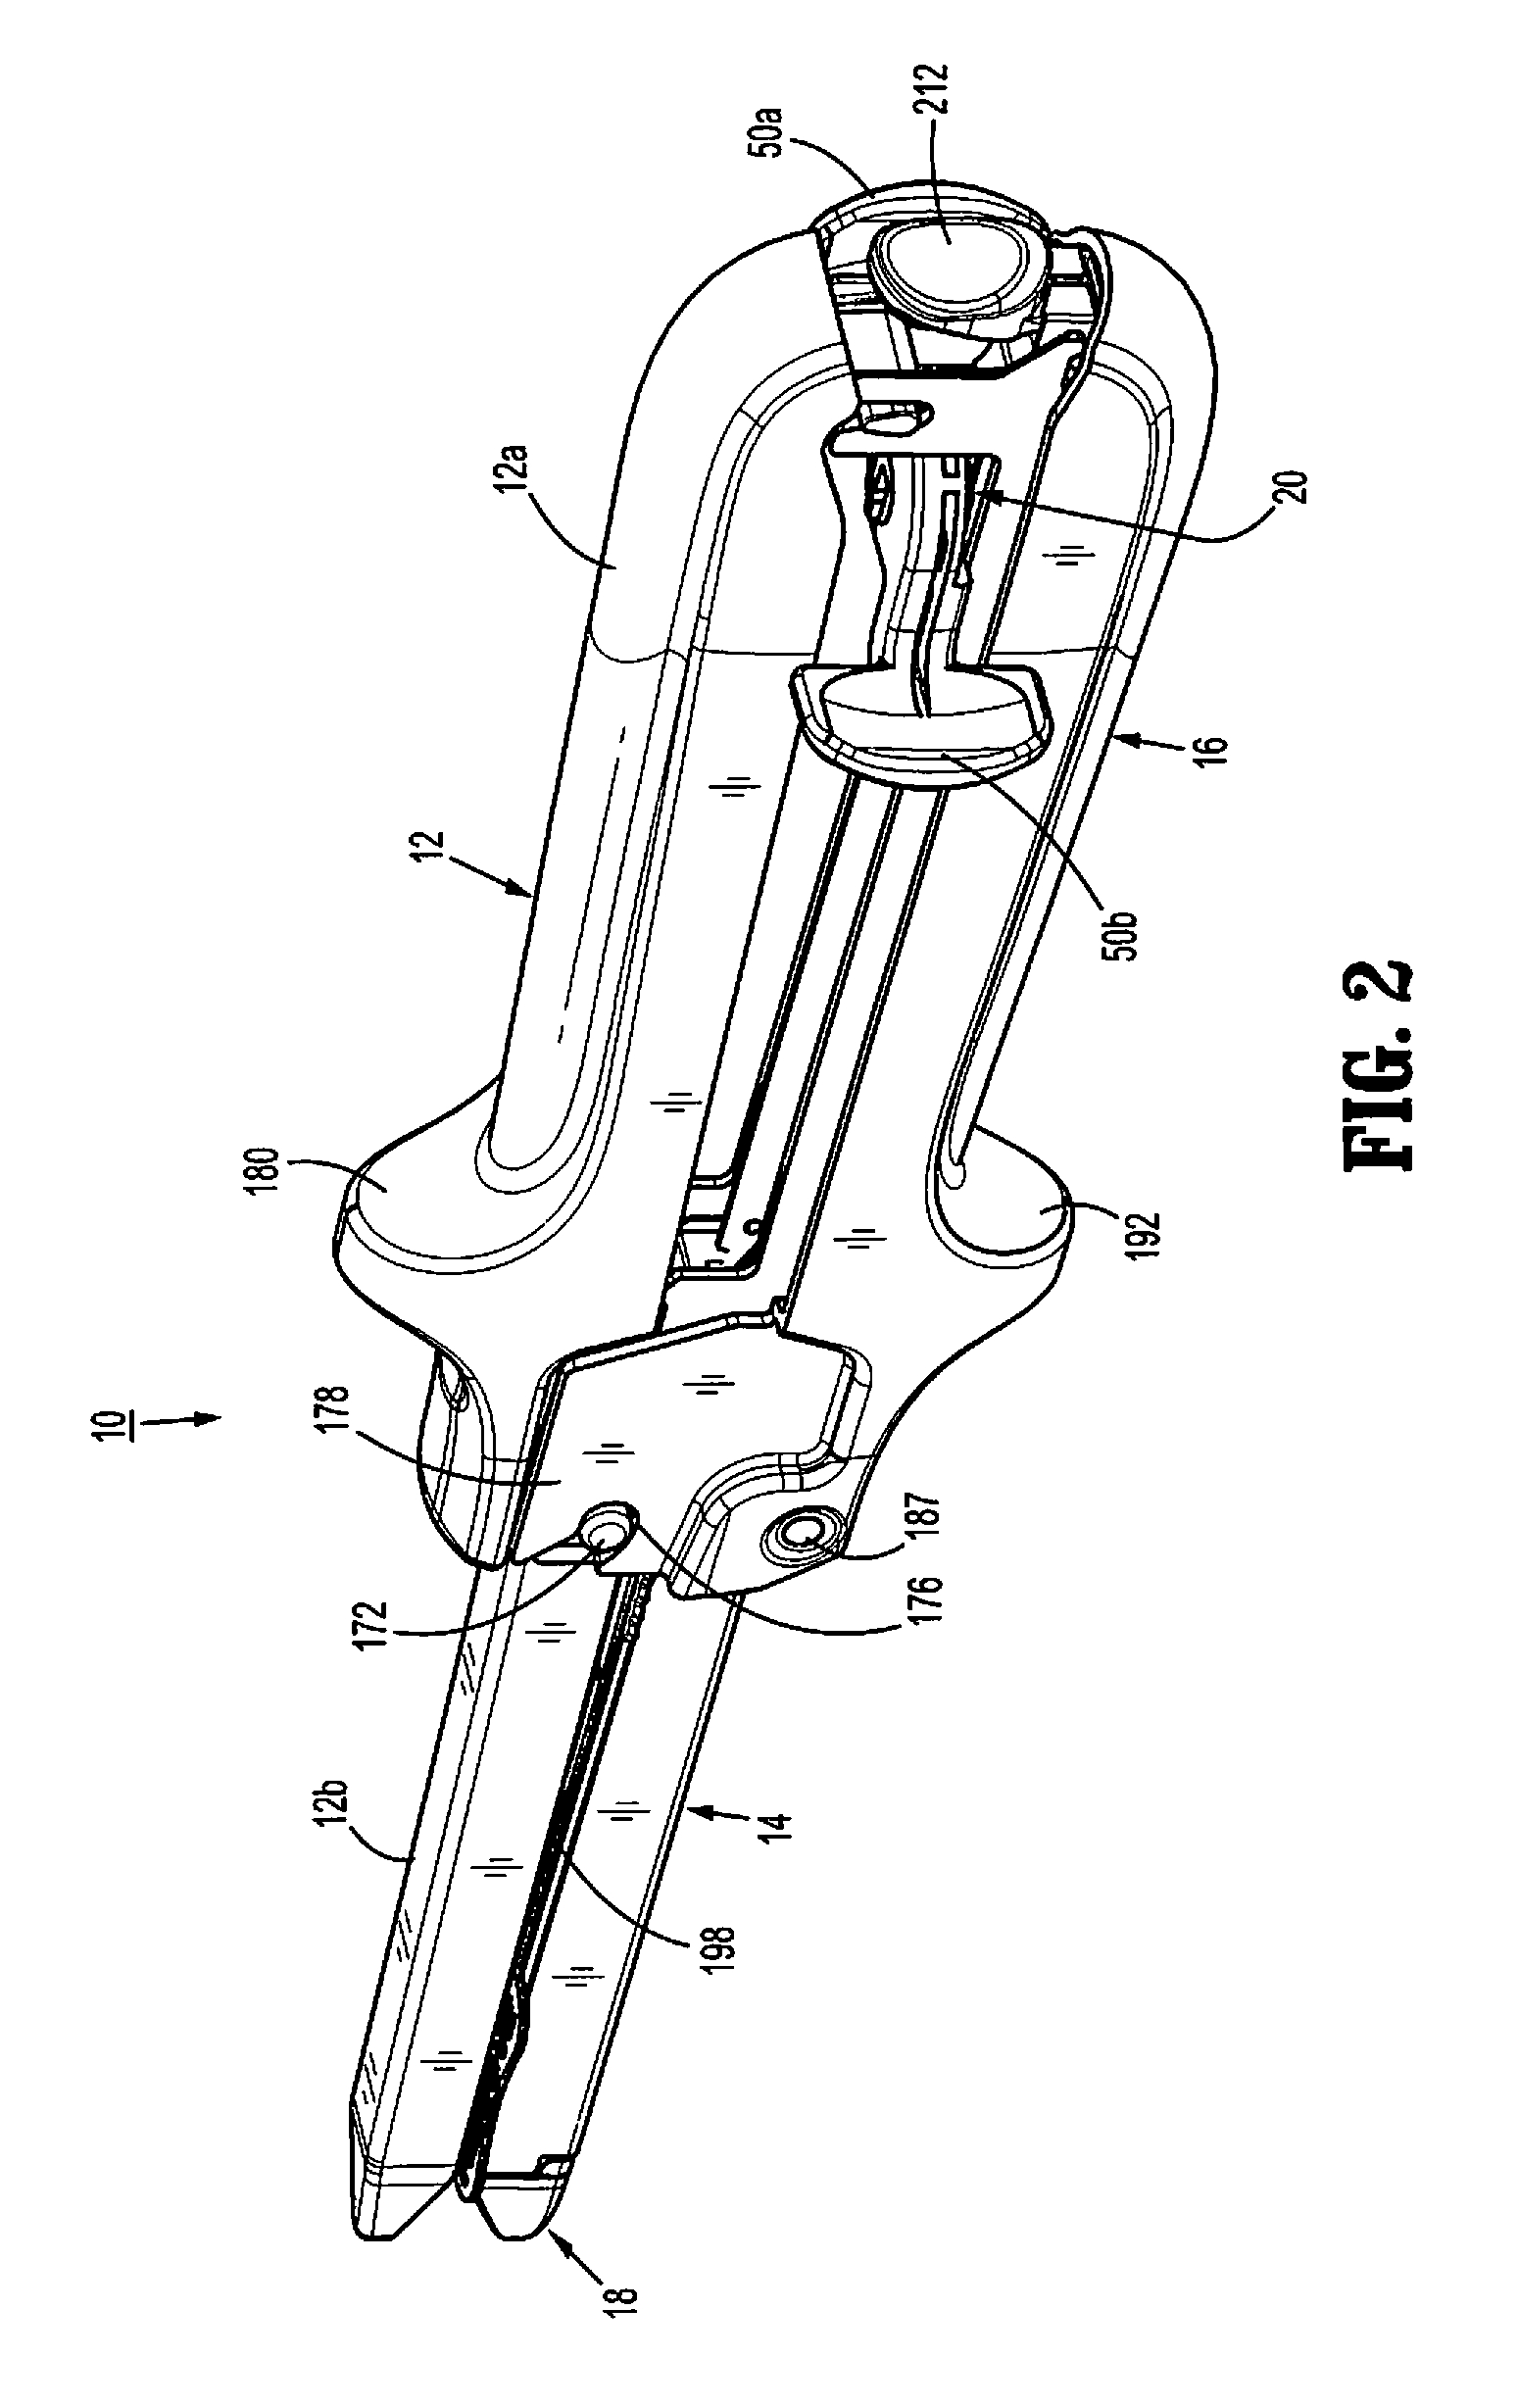 Surgical fastener applying aparatus